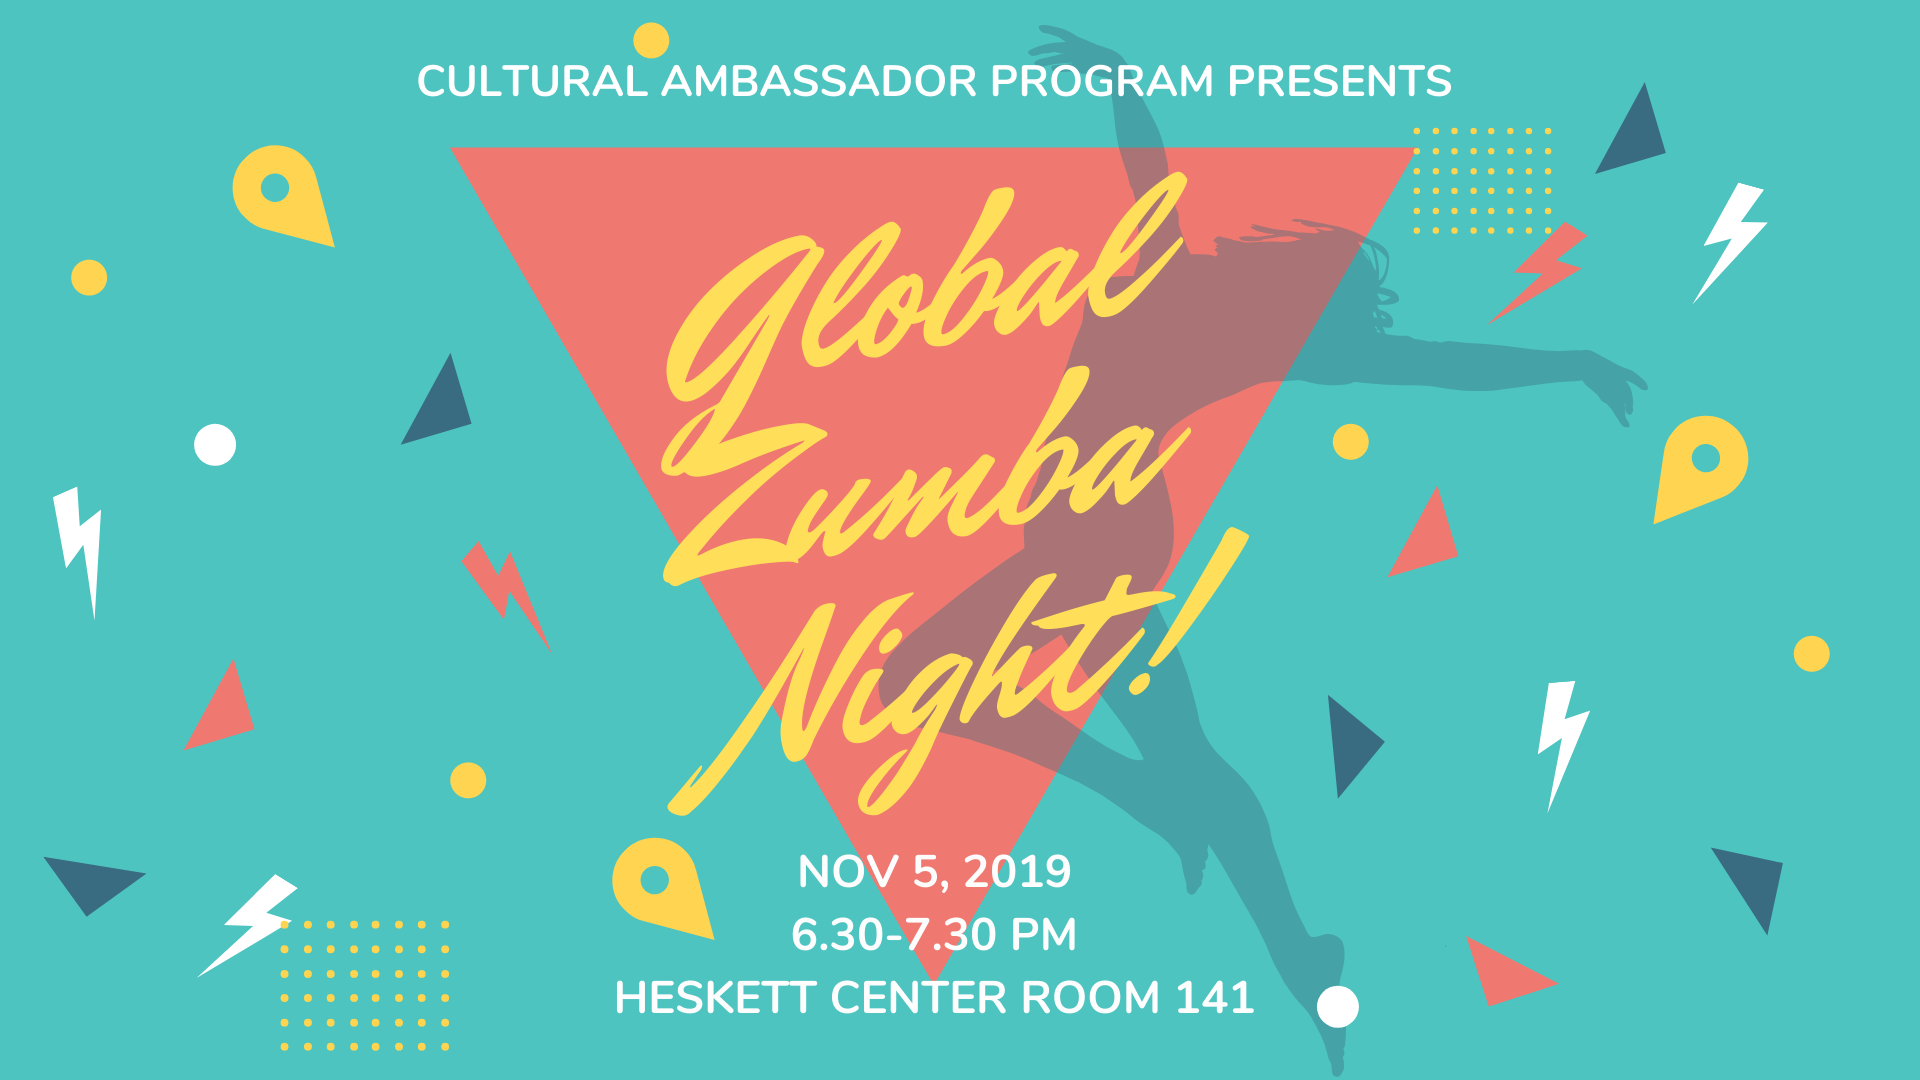 Global Zumba Night